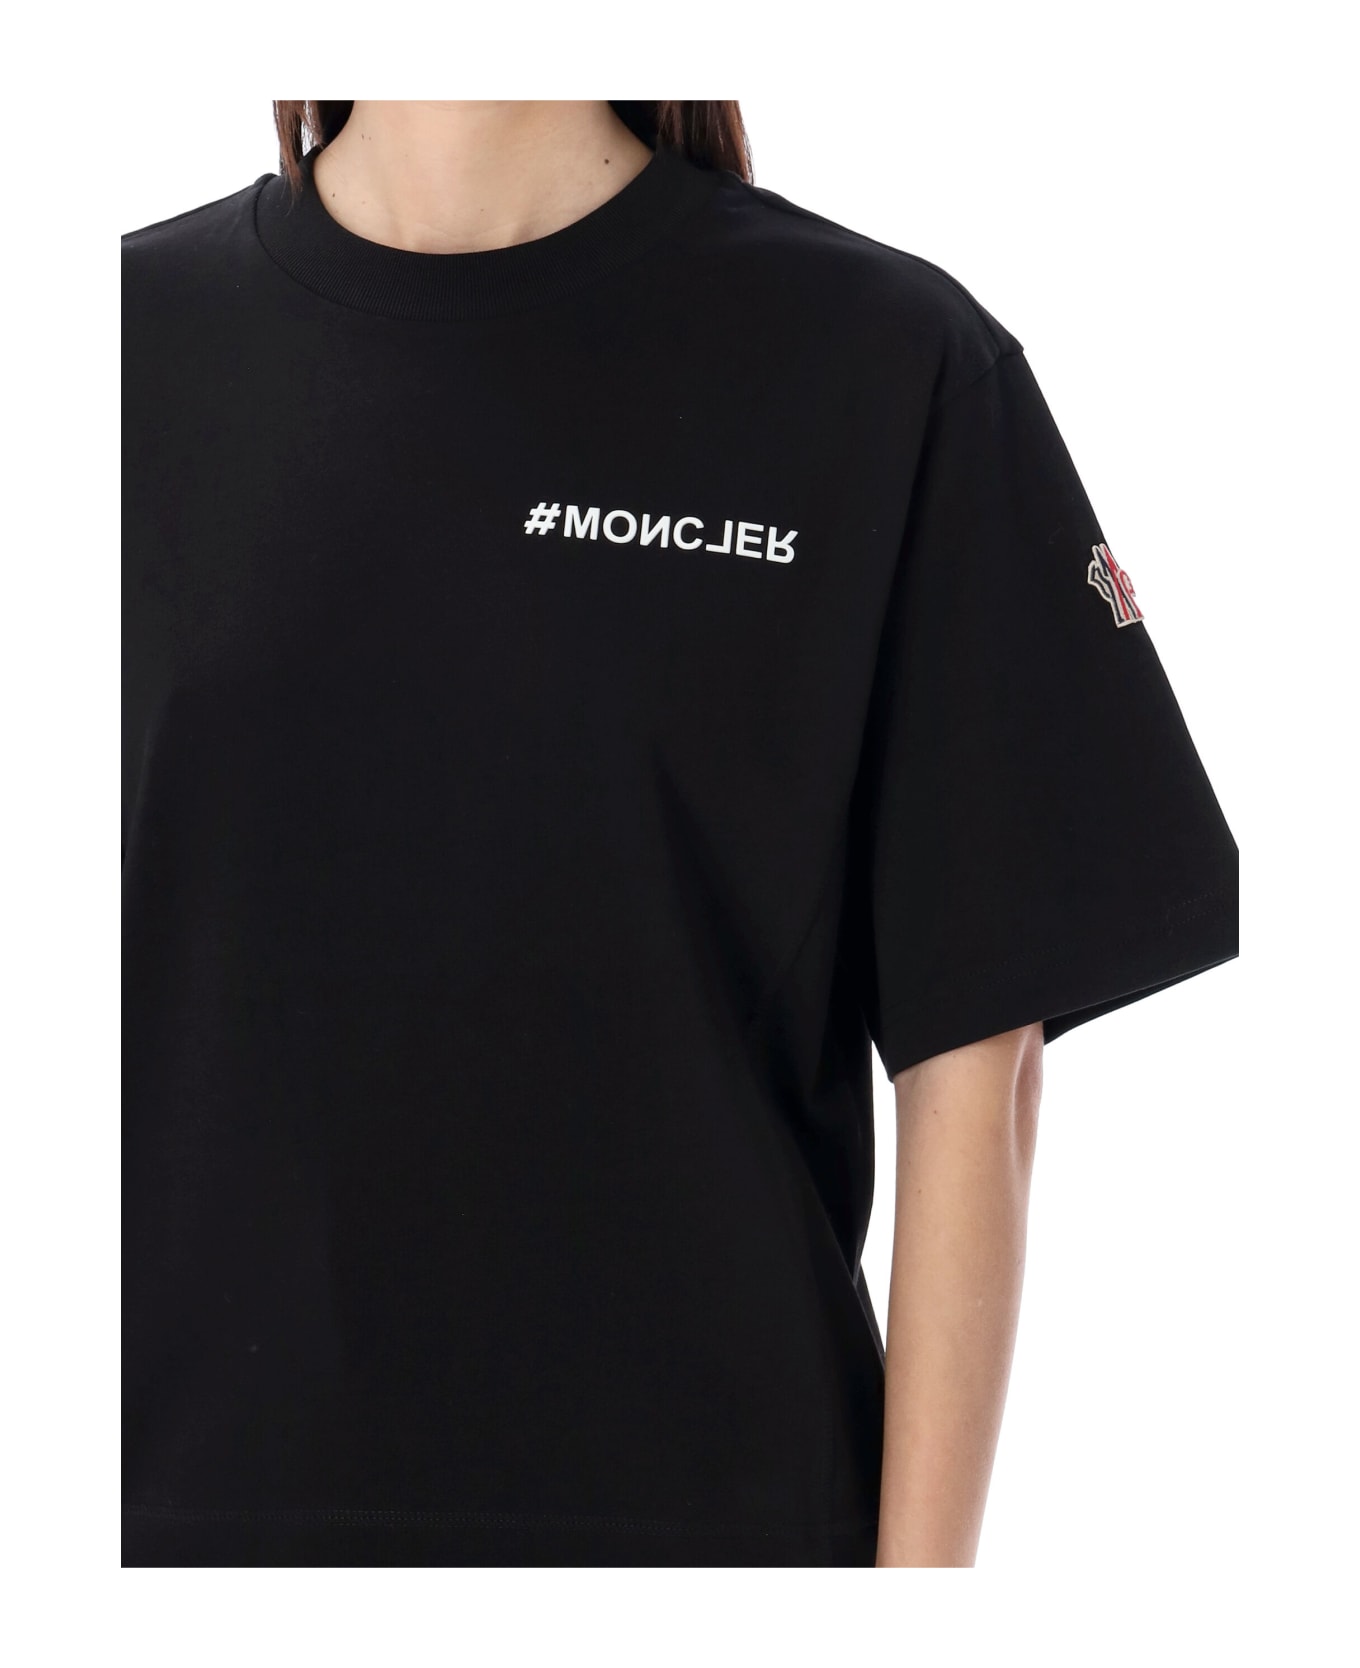 Moncler Grenoble T-shirt Tmm - 999 シャツ